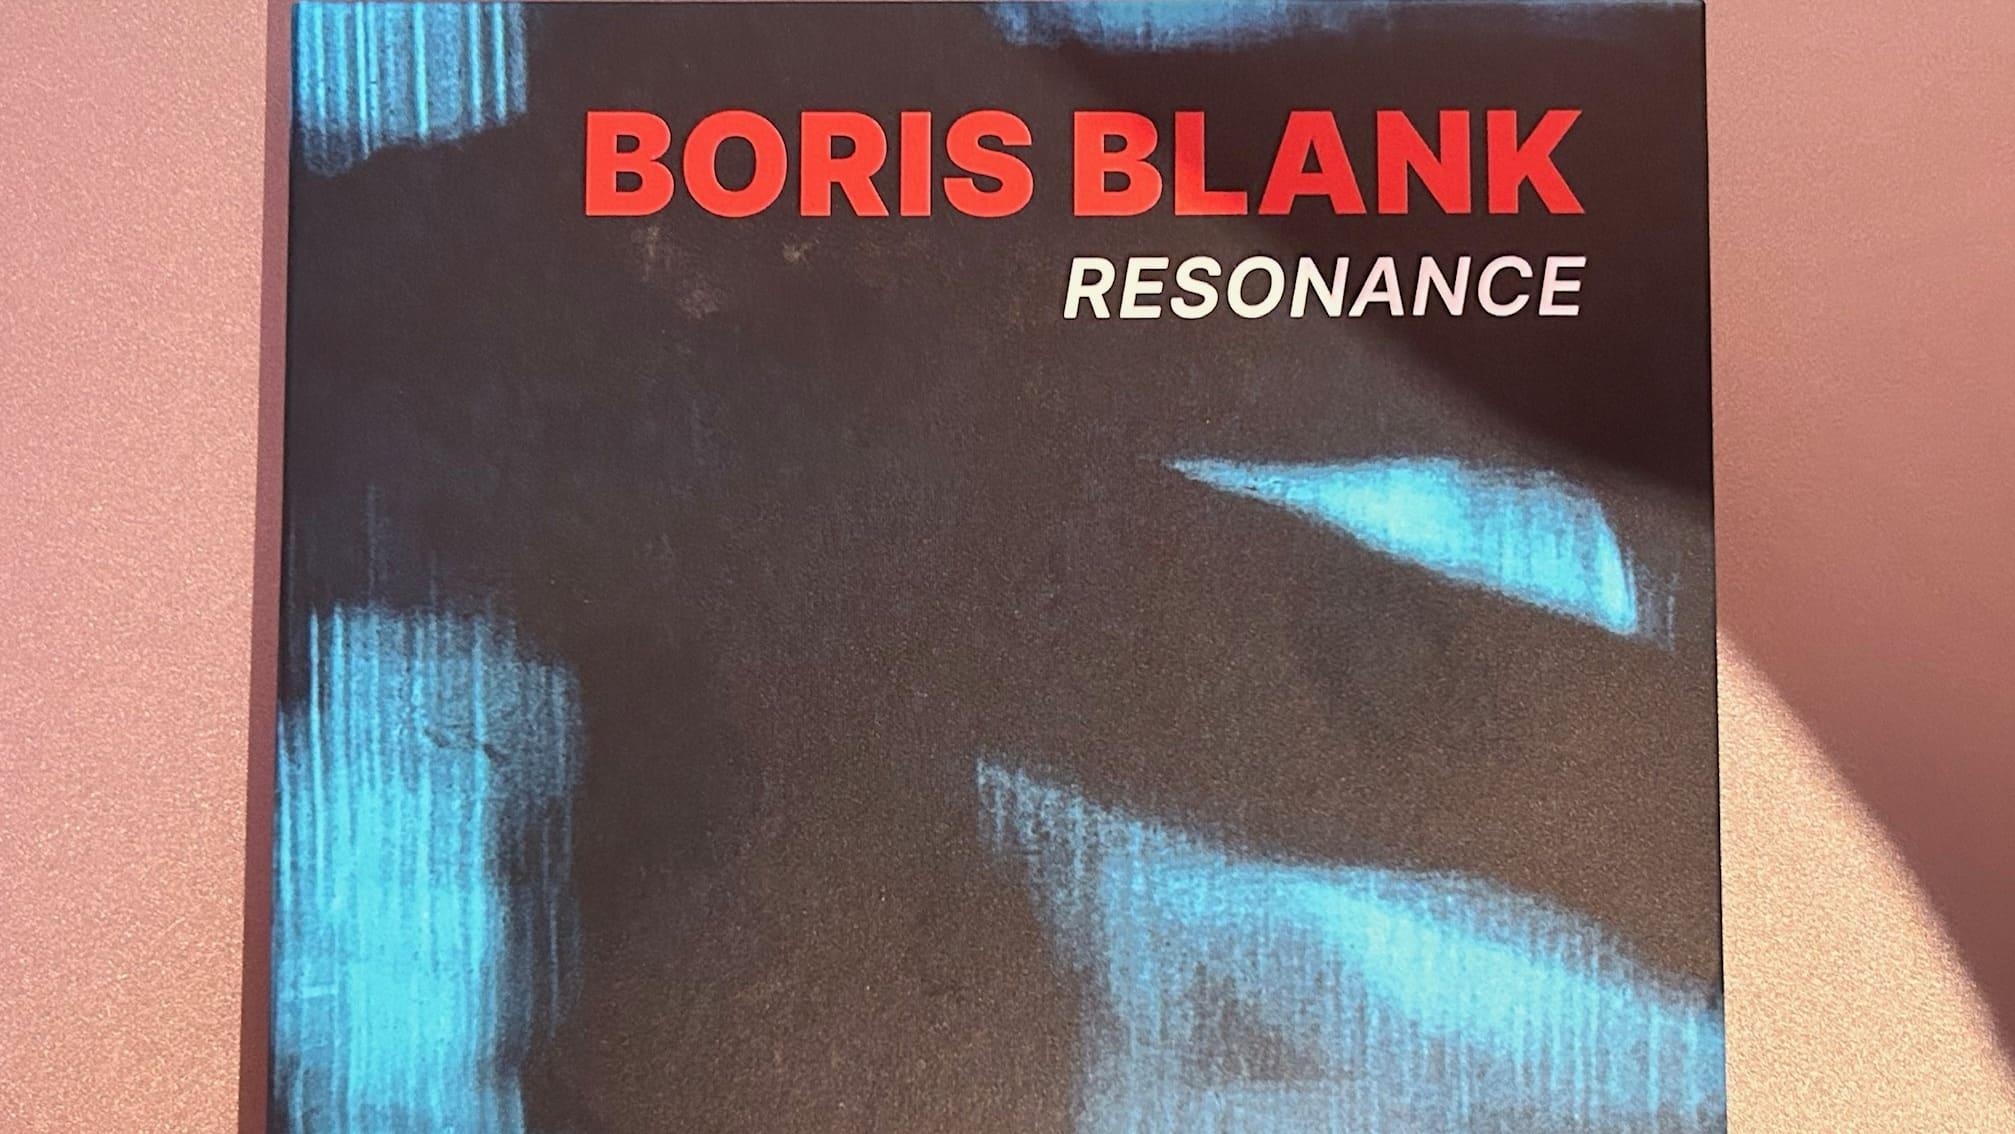 Boris Blank Resonance backdrop